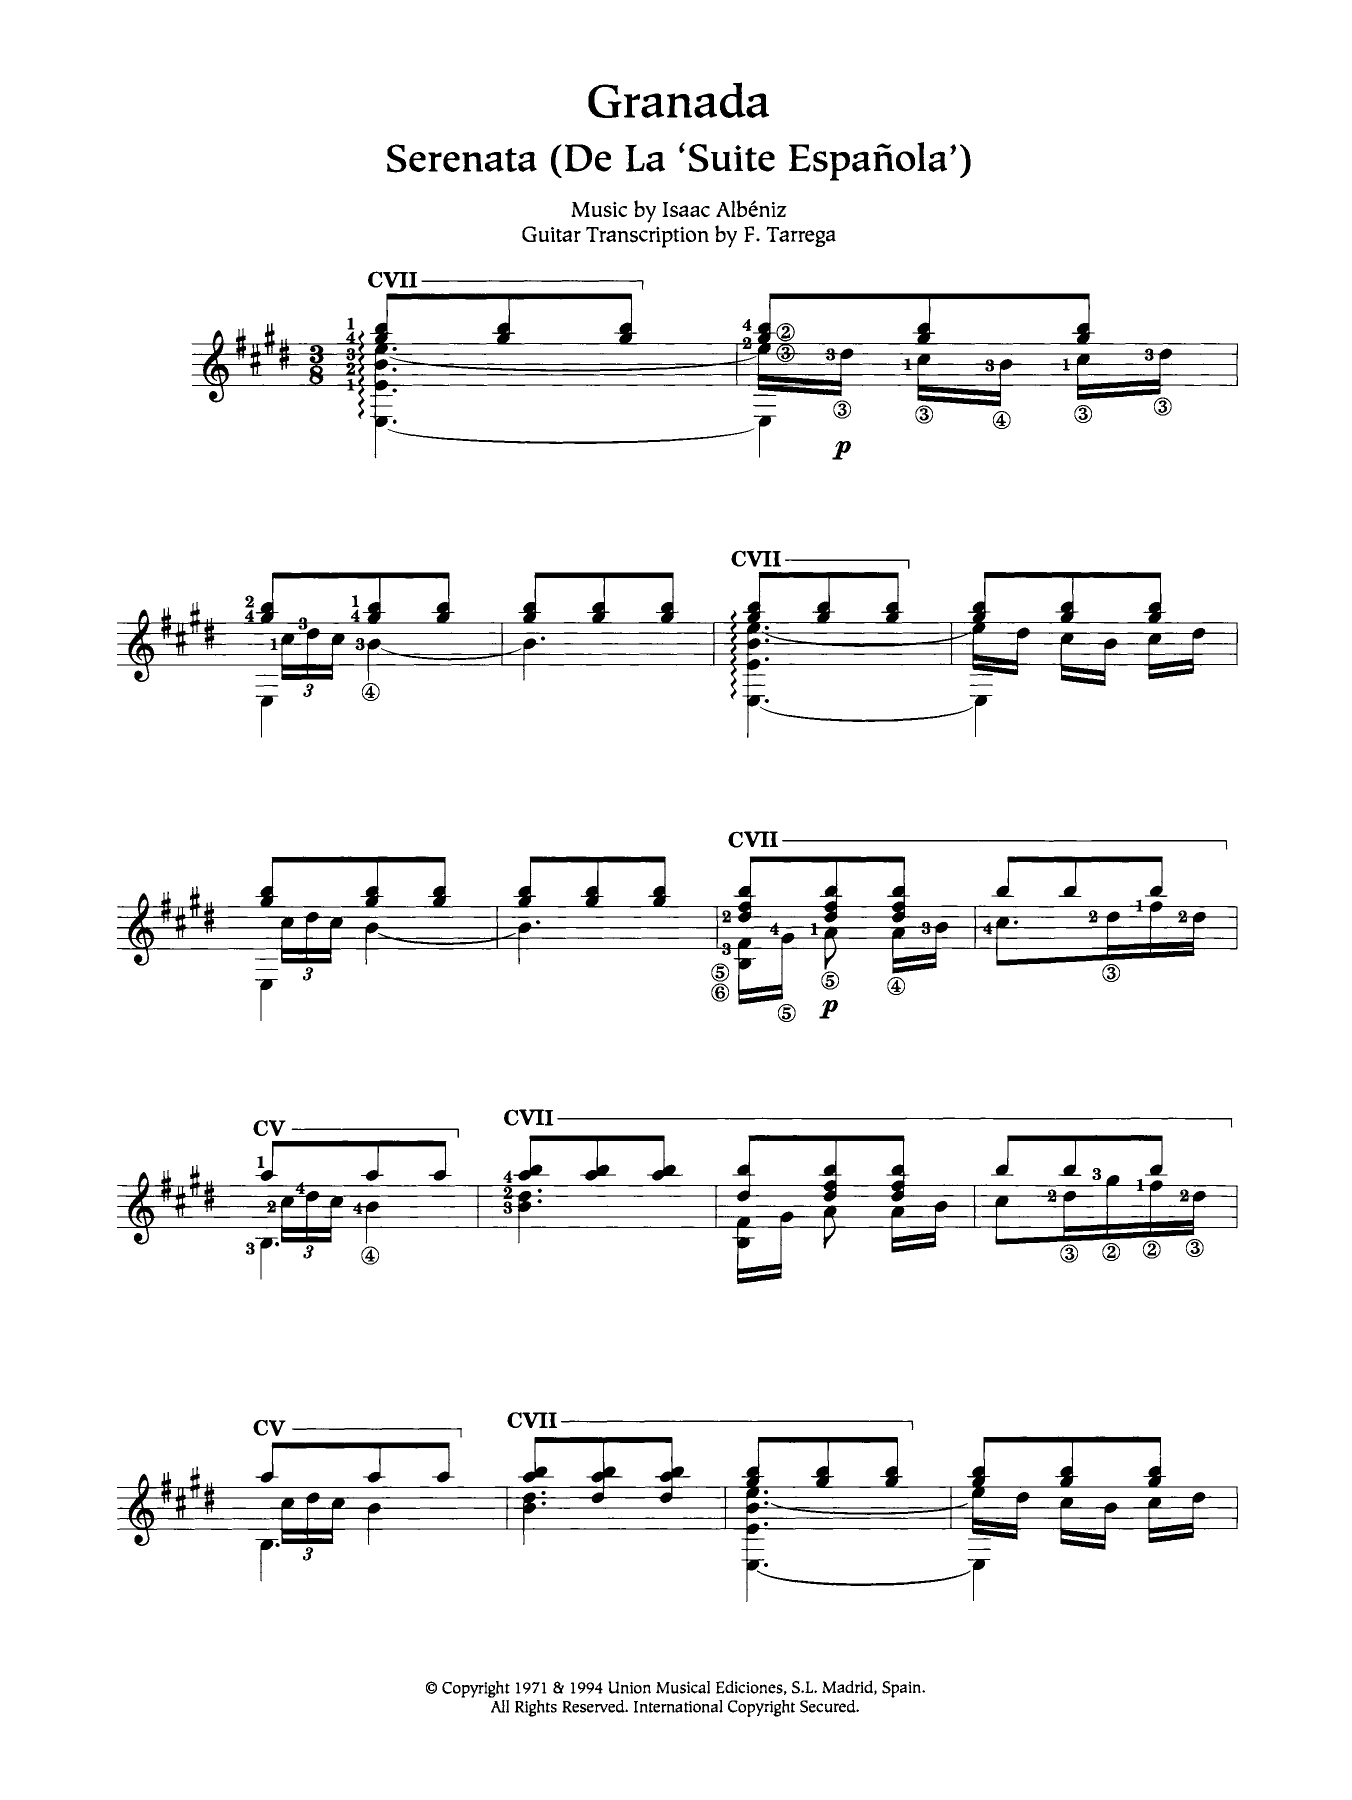 Isaac Albéniz Granada Sheet Music Notes & Chords for Guitar - Download or Print PDF